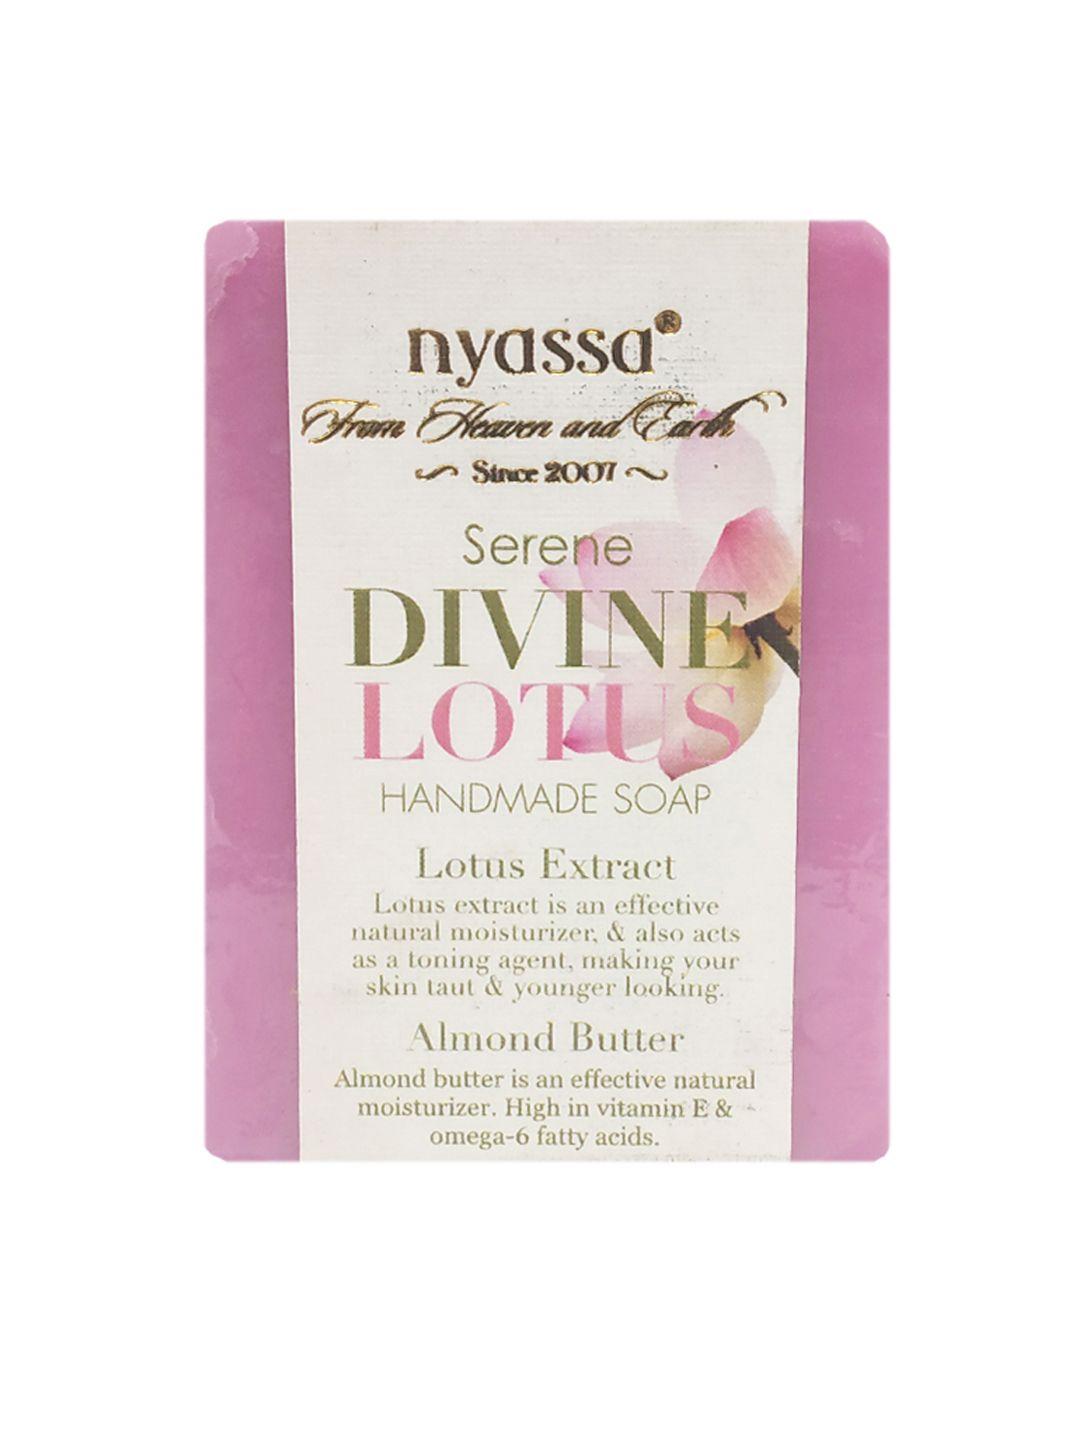 nyassa divine lotus handmade soap 75gm